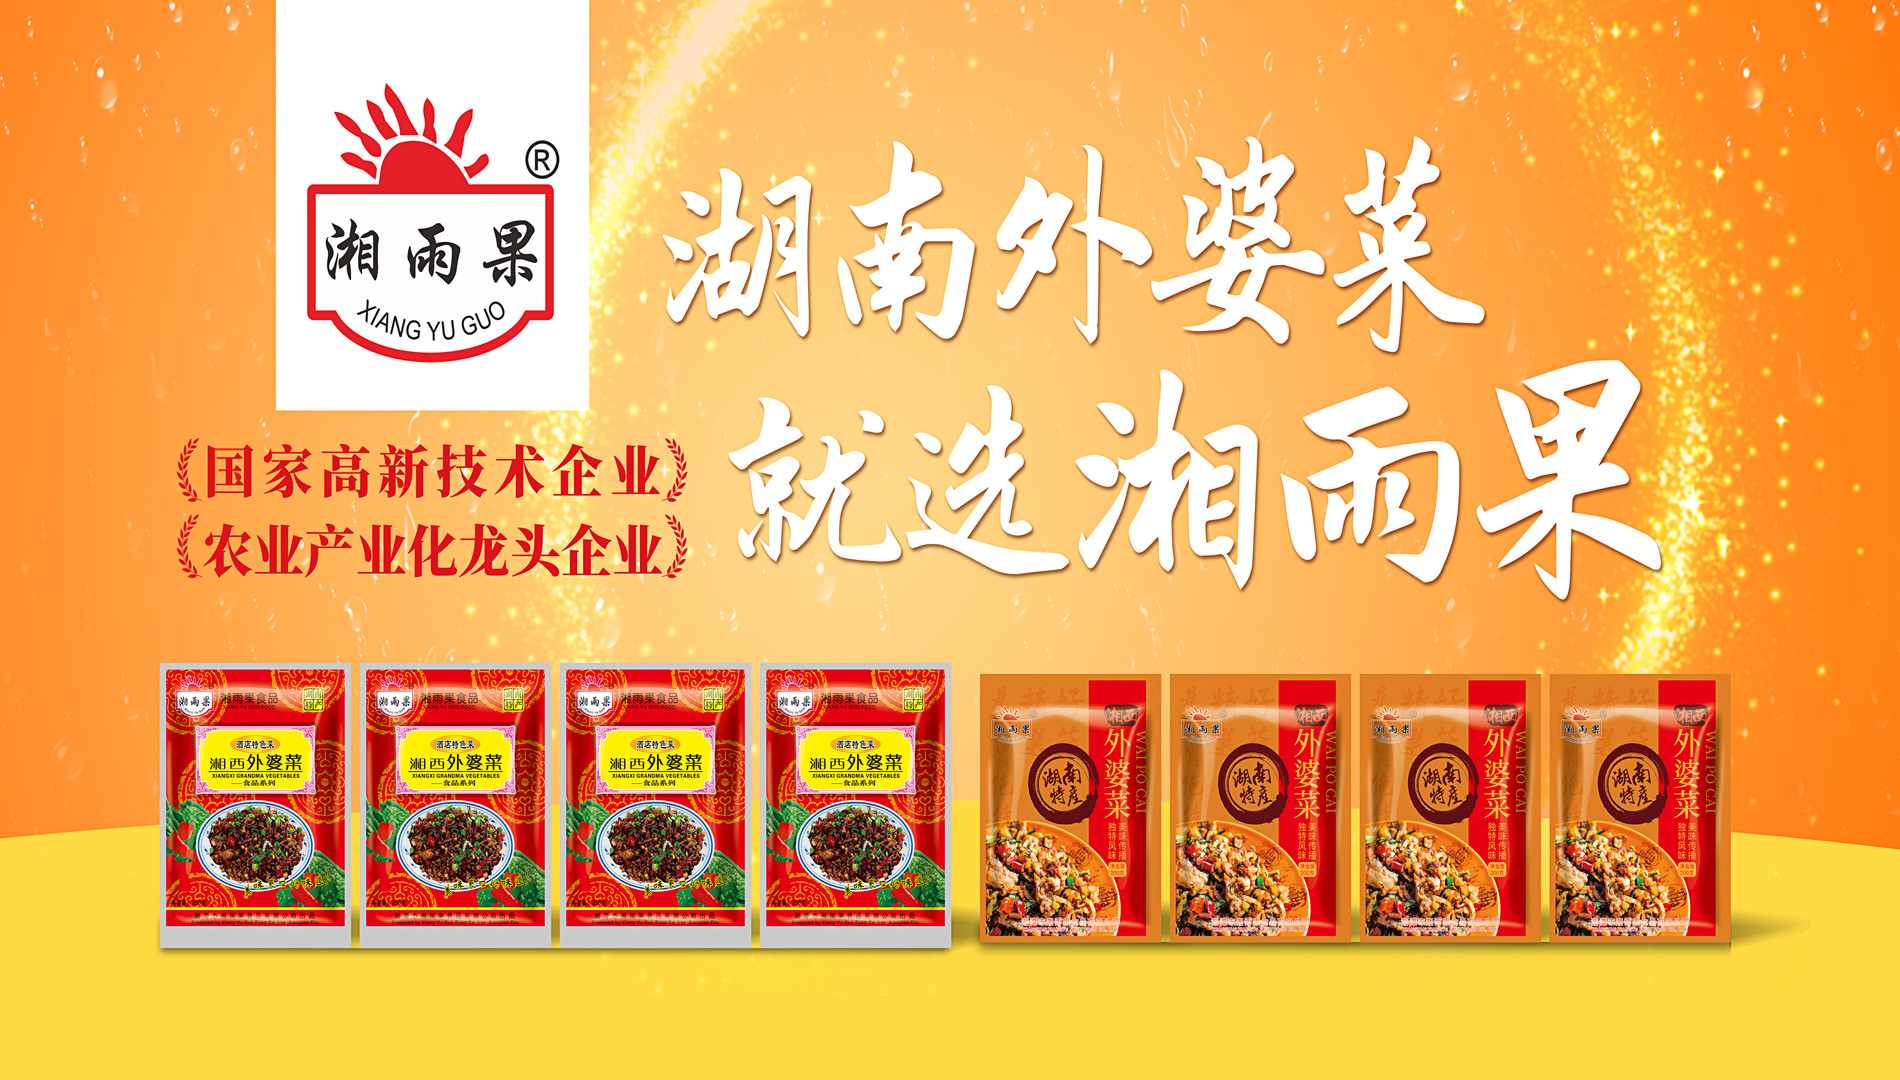 Xiang Yu Guo Food - Benchmark Enterprise fan Pre-makke Dishes Industry